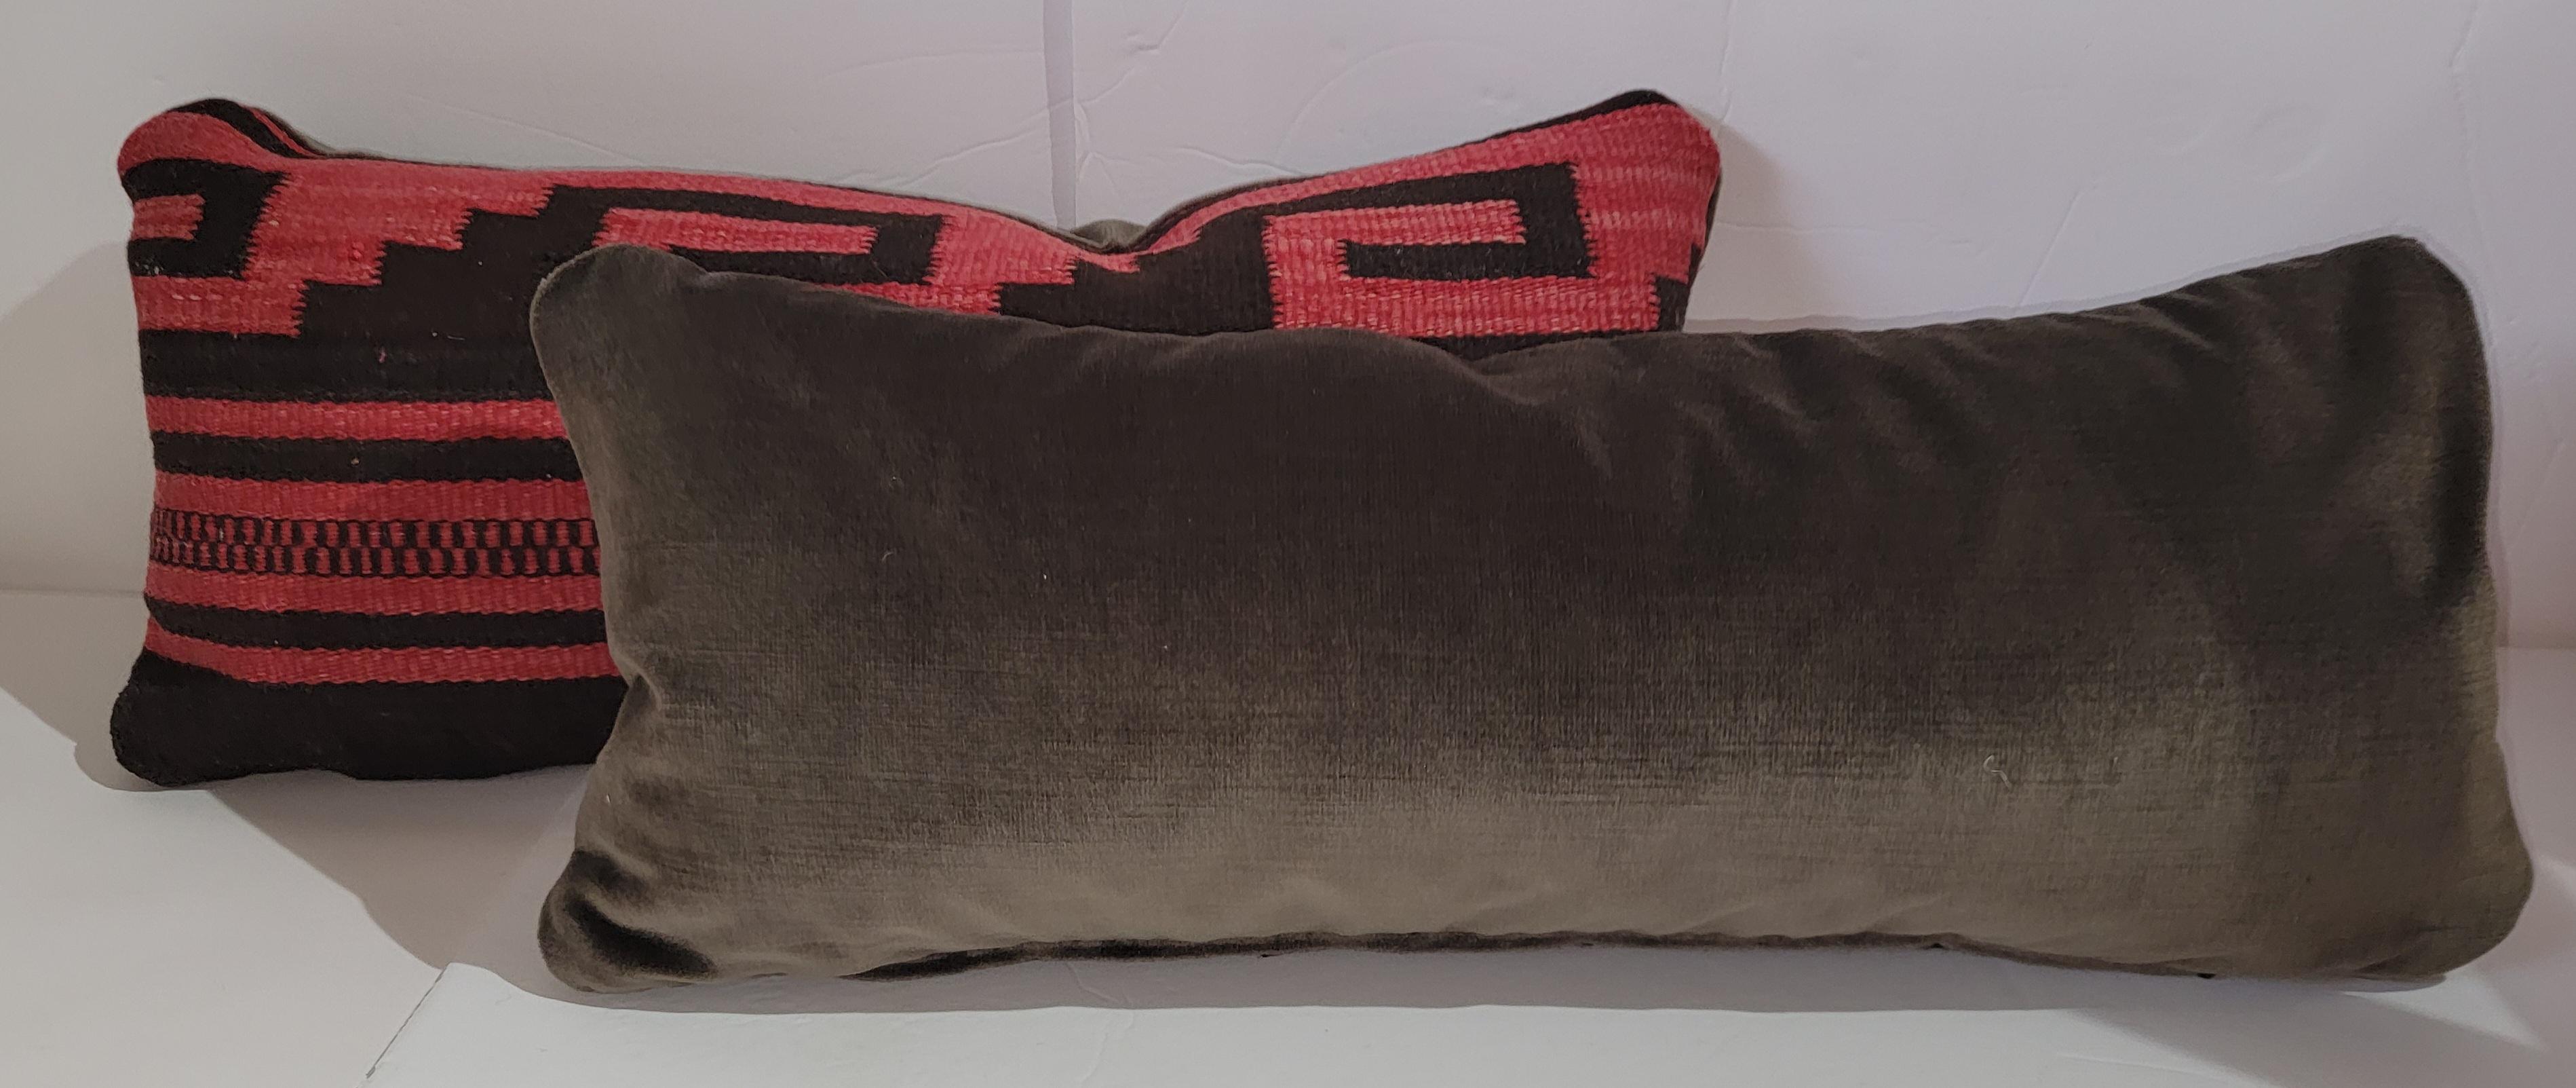 Adirondack Mexican Indian Weaving Bolster Pillows, Pair